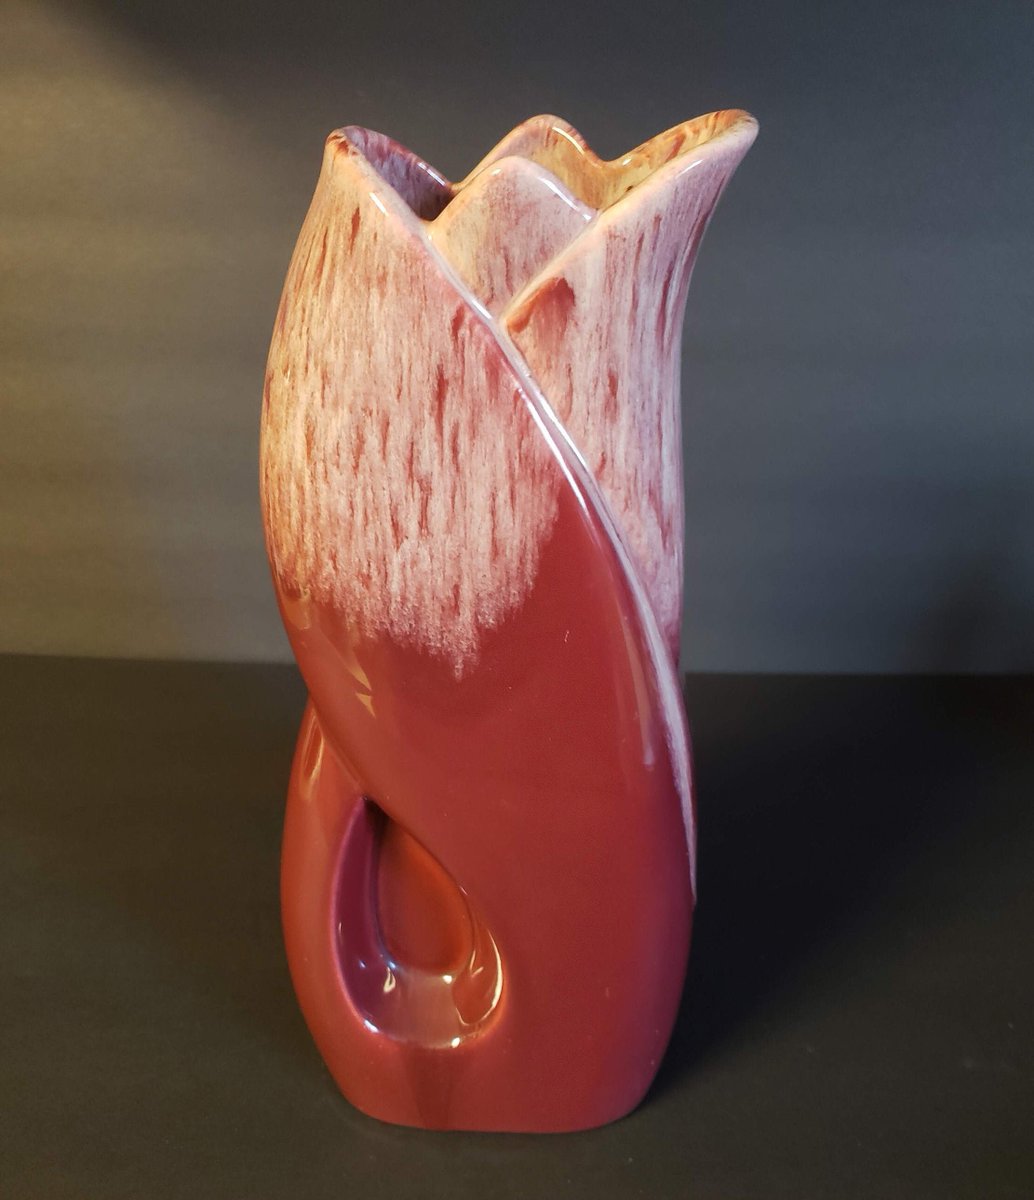 ROYAL HAEGER Burgundy Drip-Glaze Vase, Large 12'x 5.25'x3.75 Tulip Pillow Swirl Vase, by Royal HIckman, 1950s MCM Retro Mid Mod, Perfect! tuppu.net/a56cedba #AmazingFunVintage #Etsy #RetroKitsch